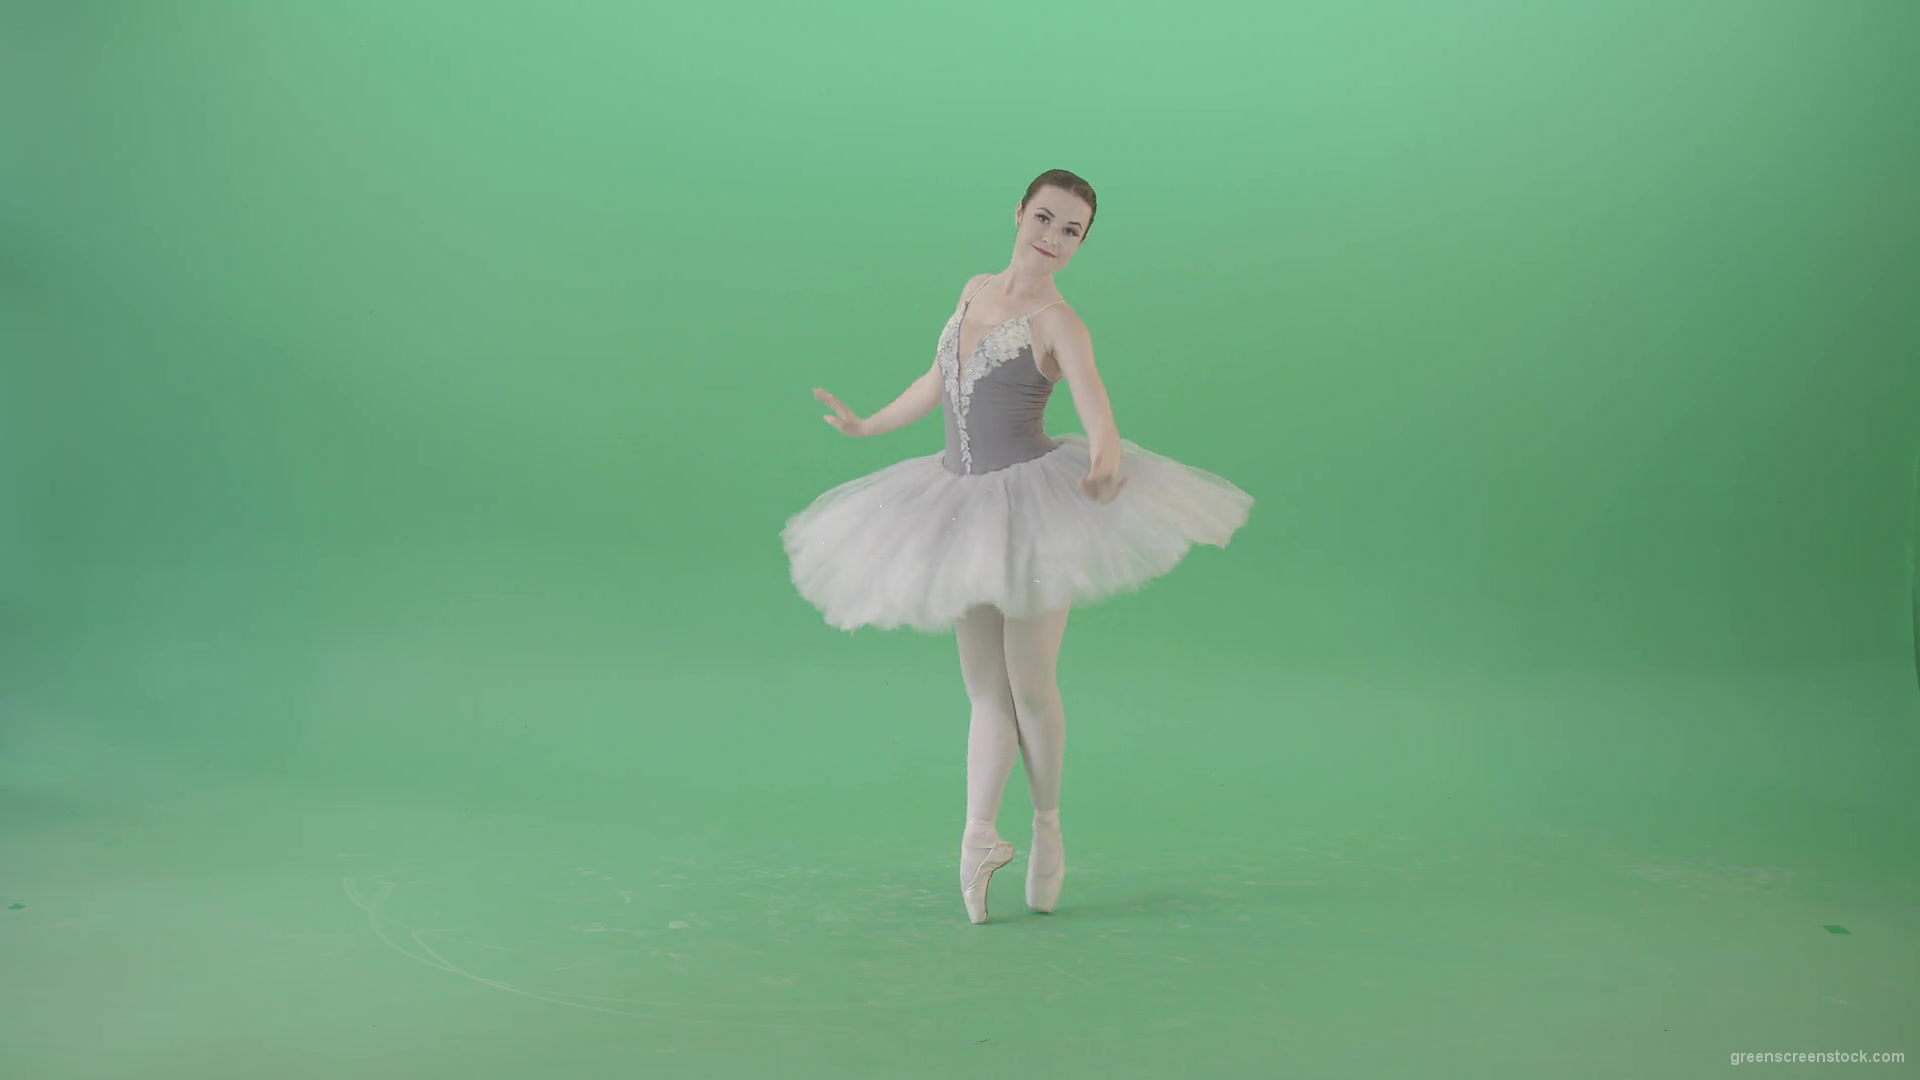 Ballerina-Woman-dancing-elegnatly-ballet-swan-lake-dance-in-green-screen-studio-4K-Video-Footage-1920_005 Green Screen Stock